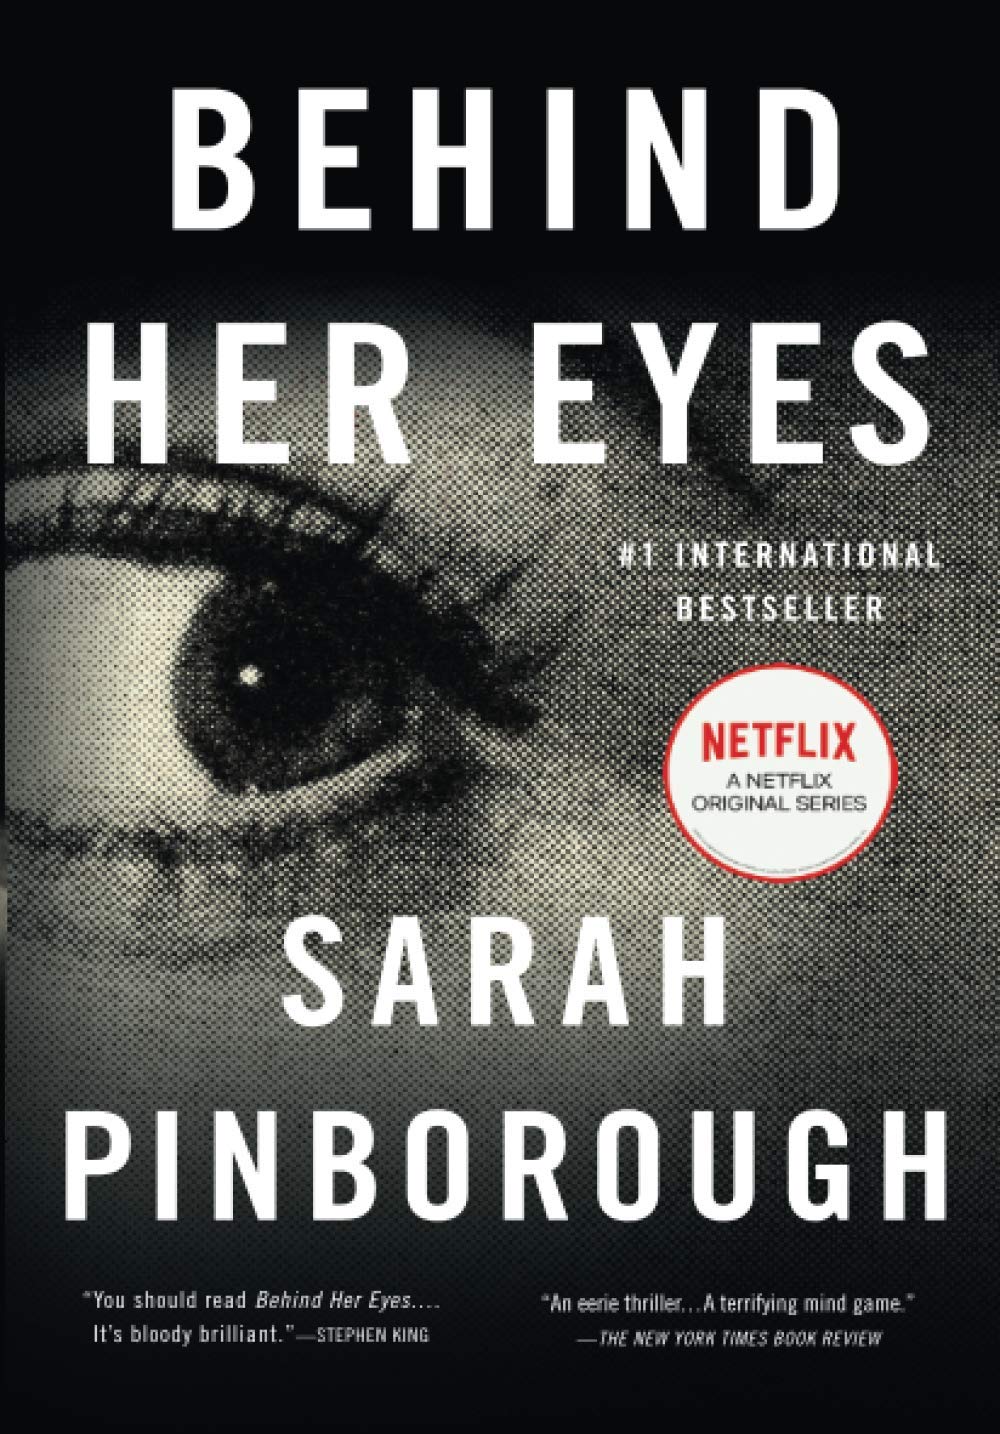 Behind Her Eyes: A Suspenseful Psychological Thriller Paperback by Sarah Pinborough